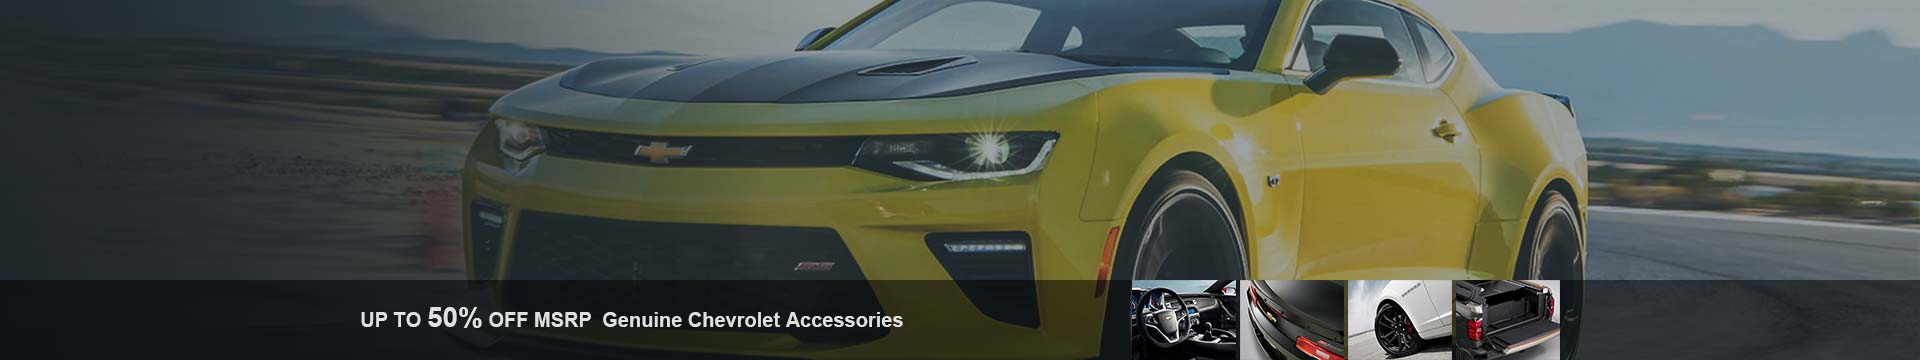 Shop Chevrolet Trailblazer EXT accessories with lowest prices